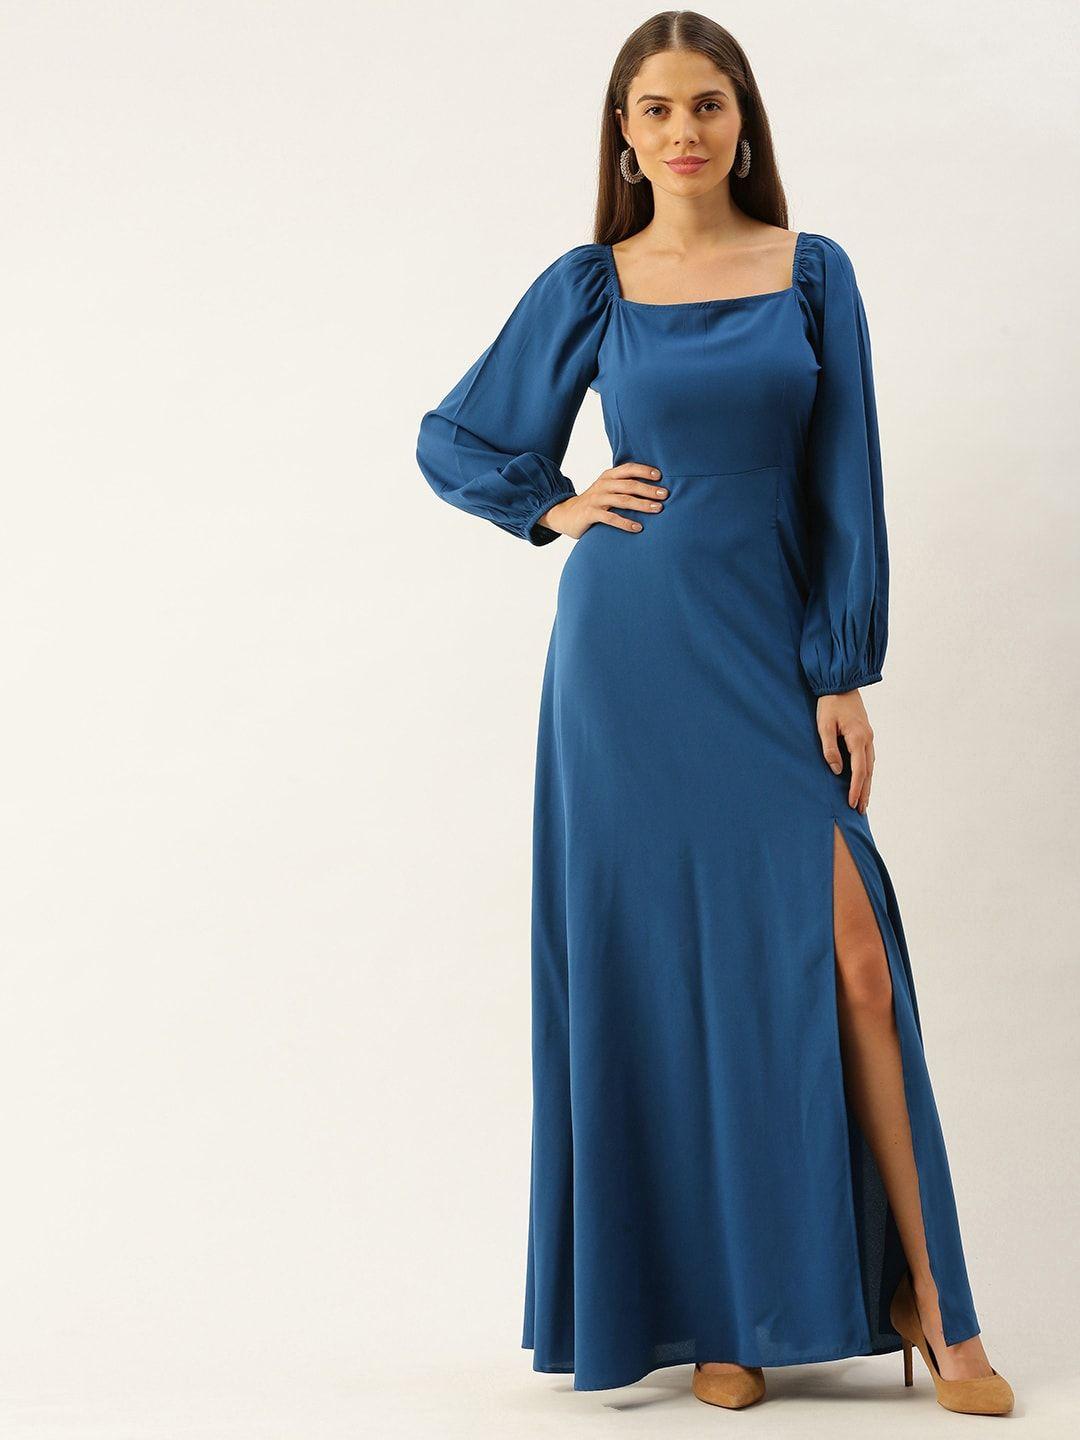 berrylush blue maxi dress with high slit detail